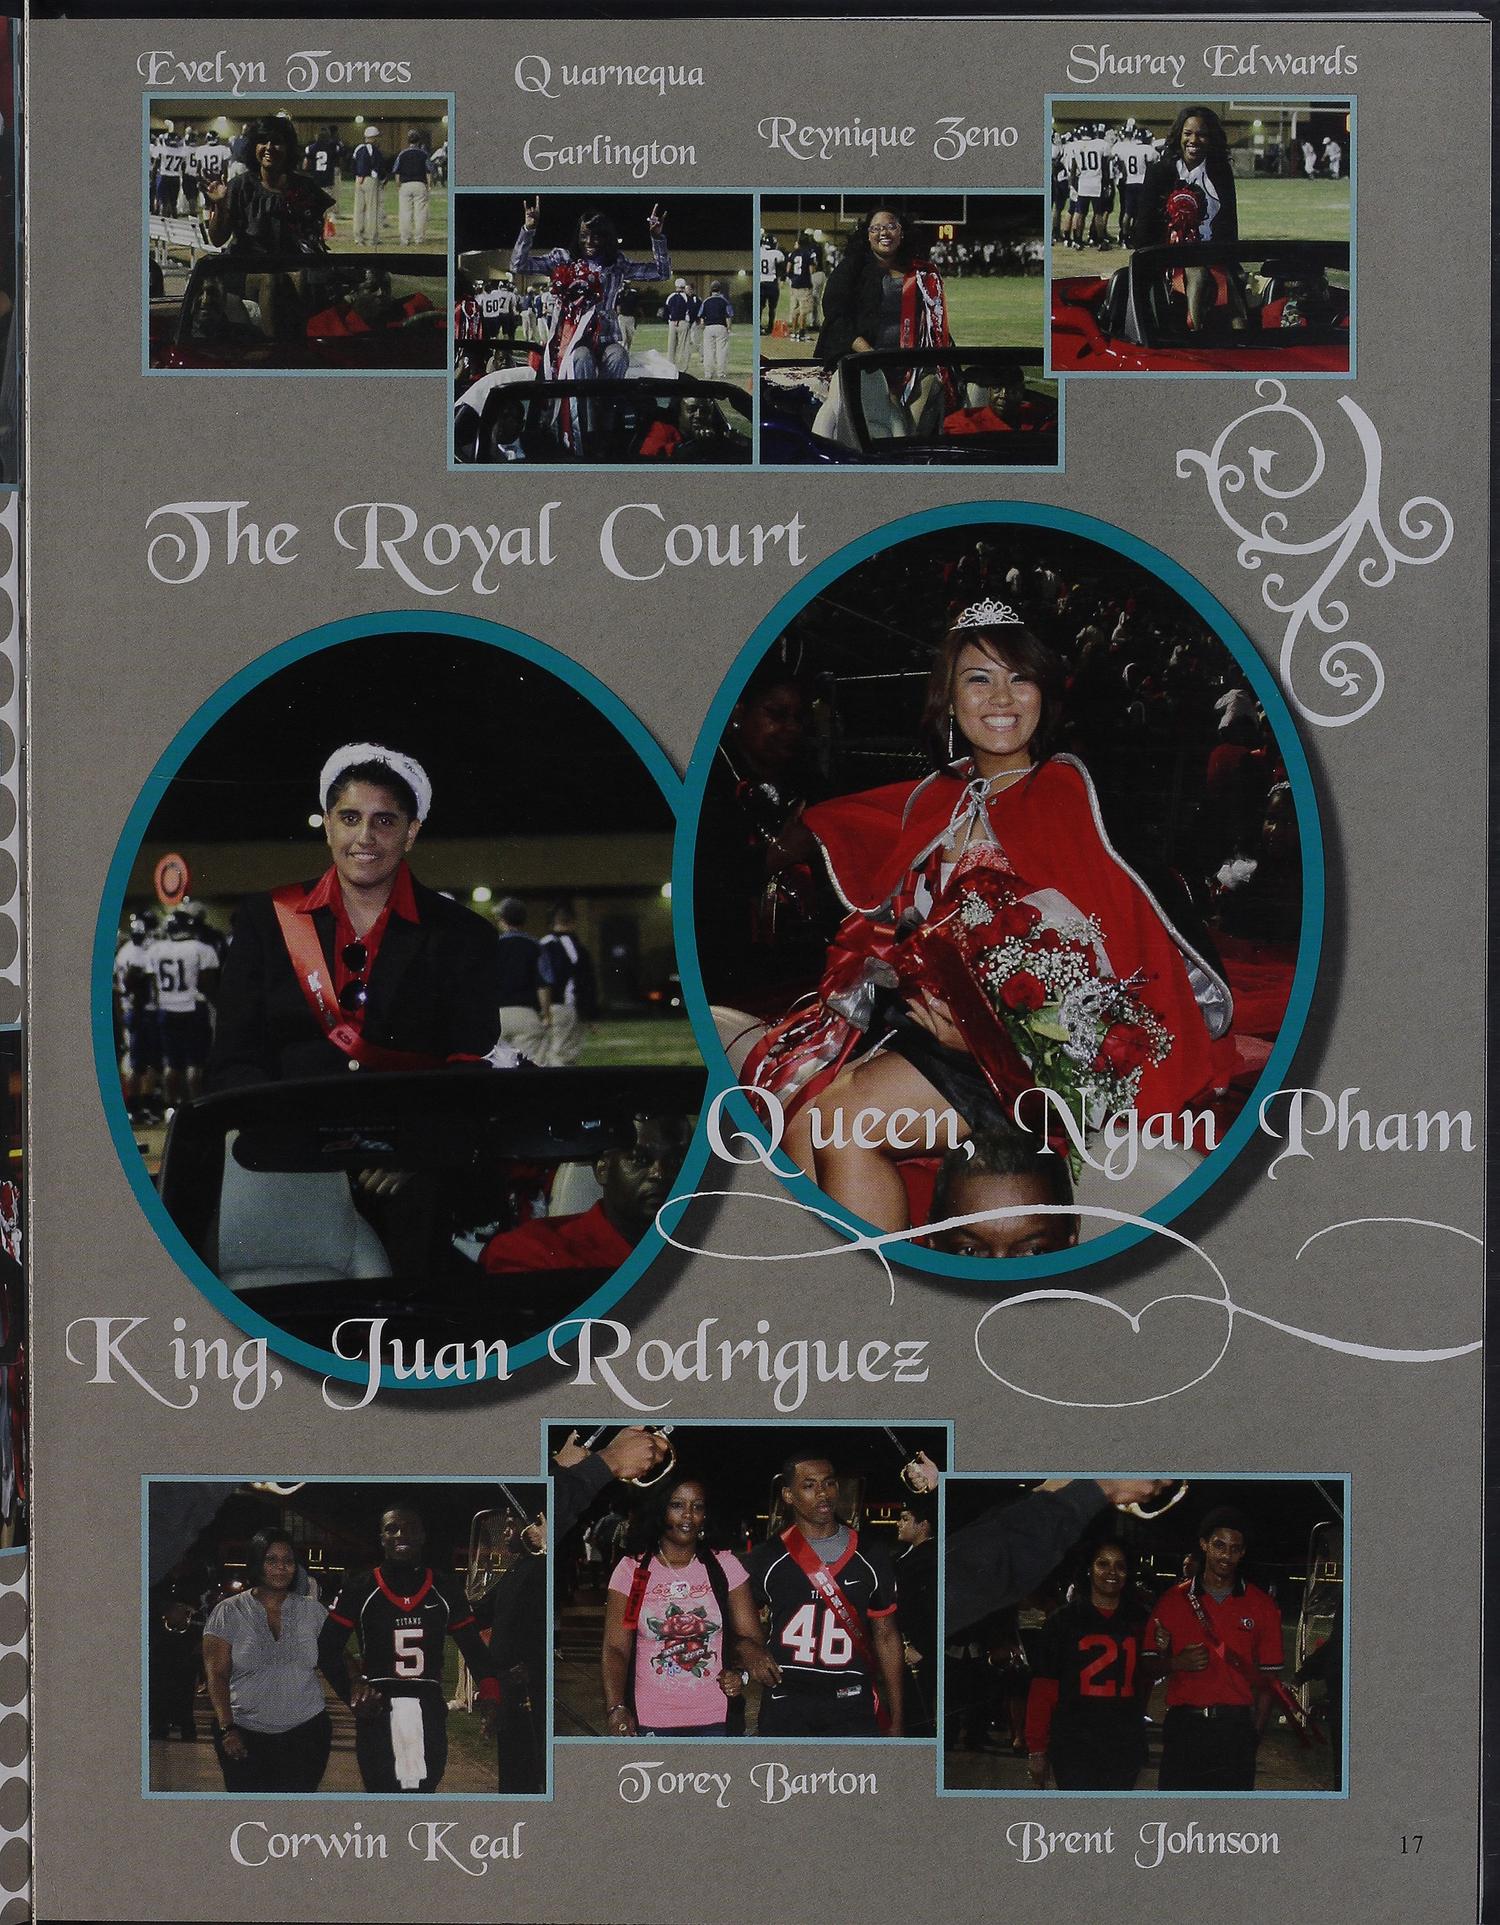 Titanium, Yearbook of Memorial High School, 2010
                                                
                                                    17
                                                